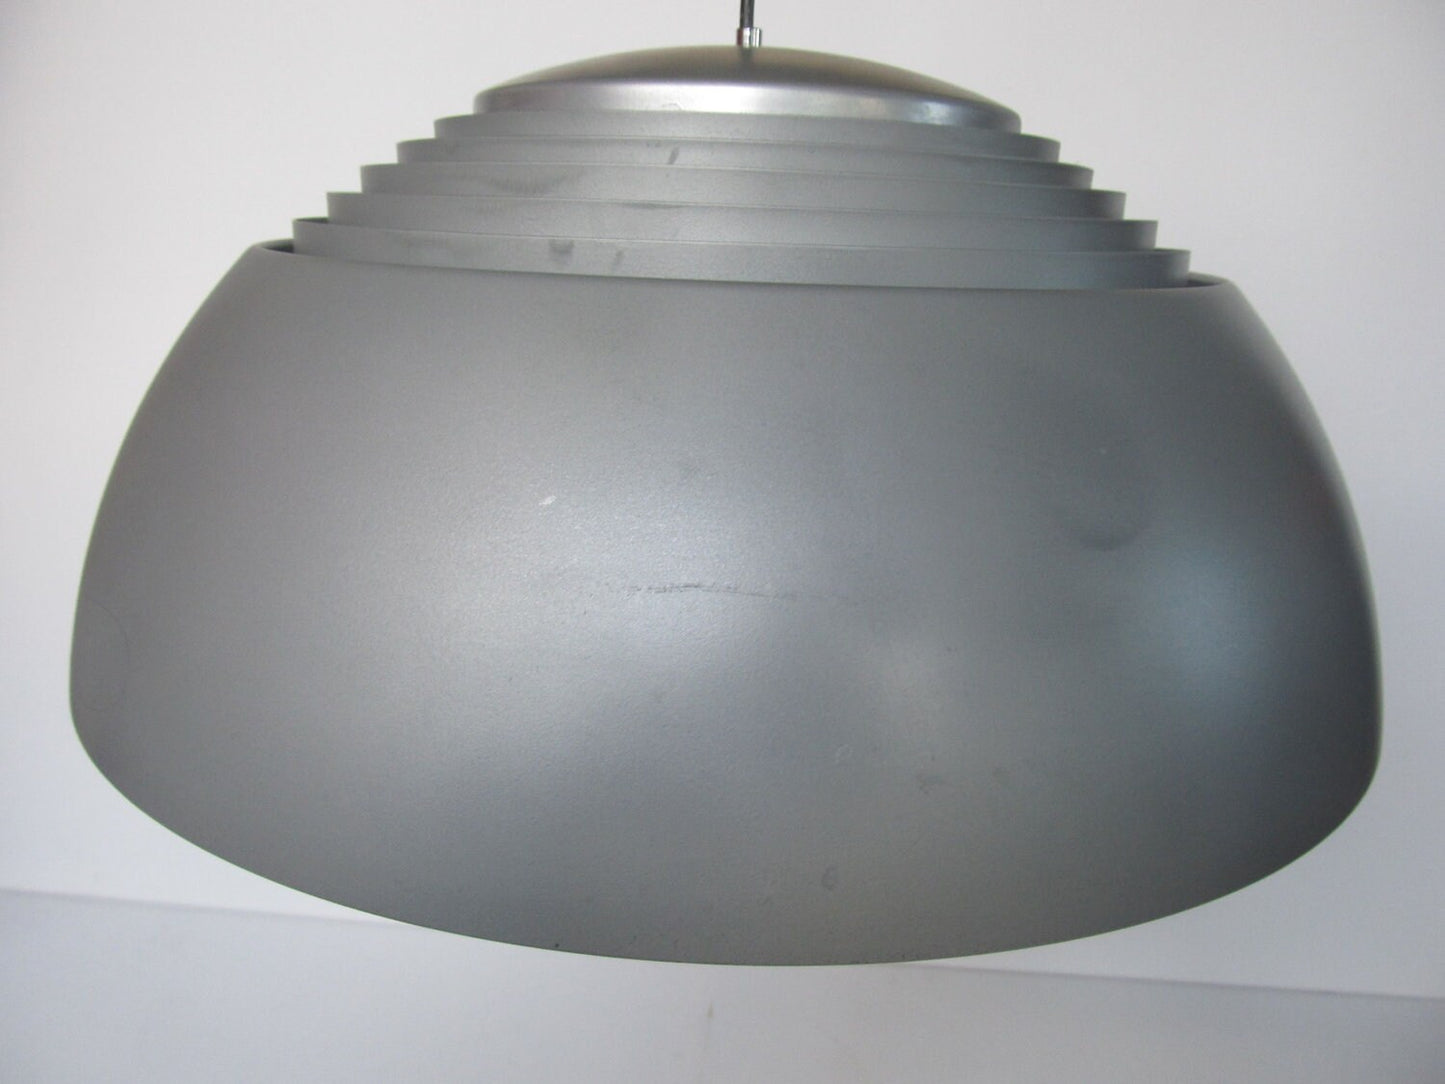 Arne Jacobsen AJ Royal plafondlamp, voor de Deense fabrikant Louis Poulsen, bekend als AJ Royal Pendel